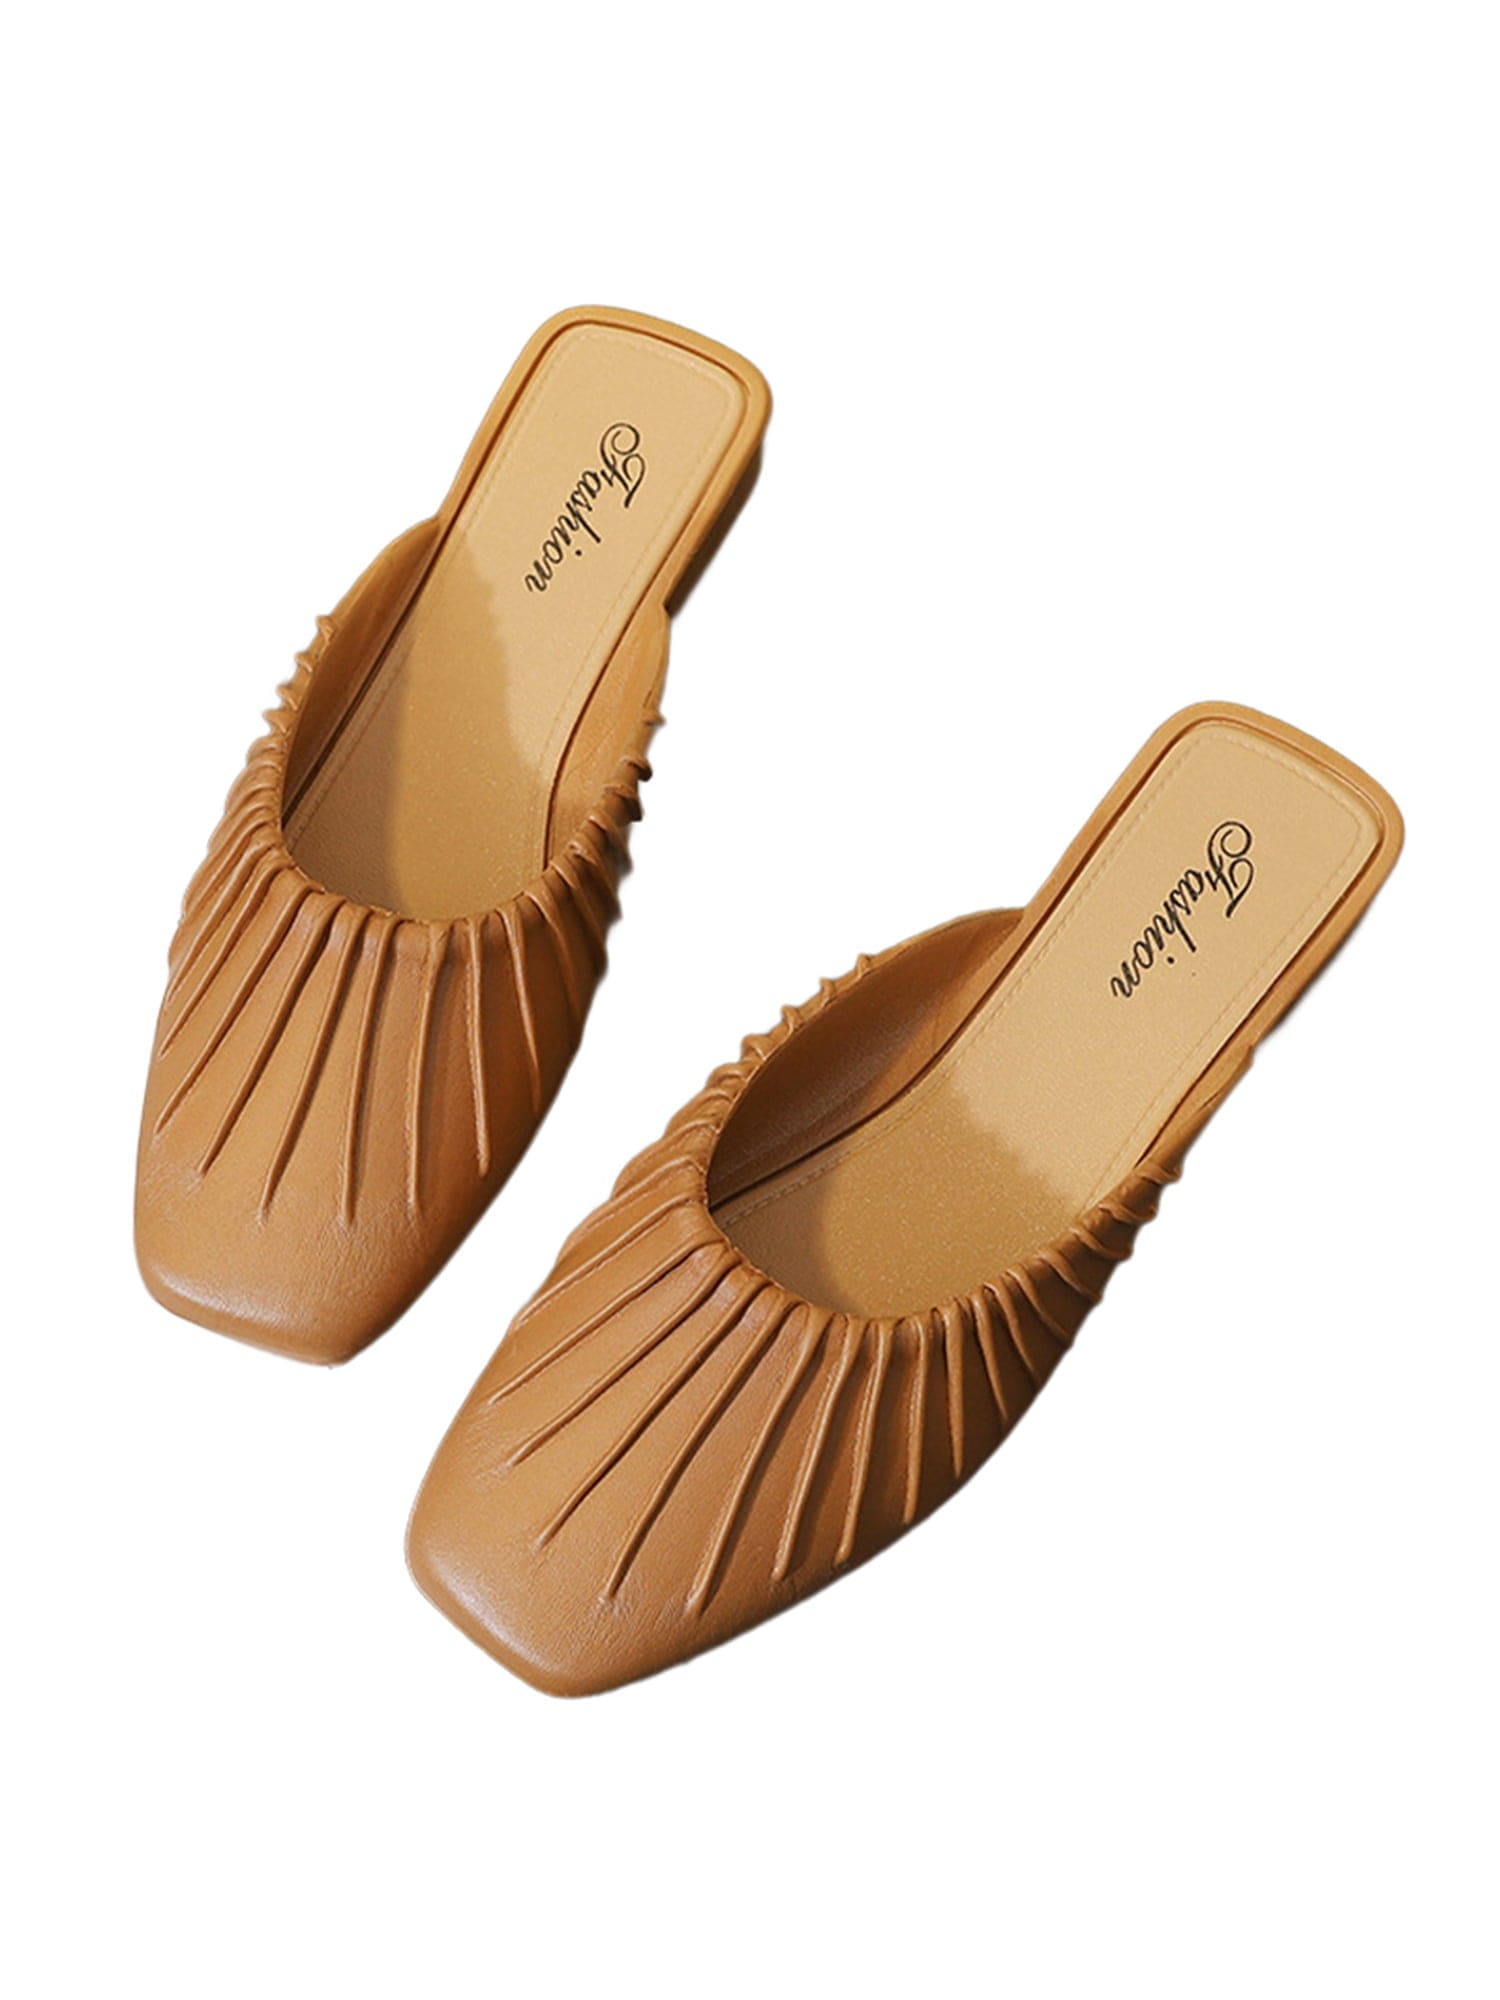 THATLILSHOP Khaki / US 5 Fashion Sandals